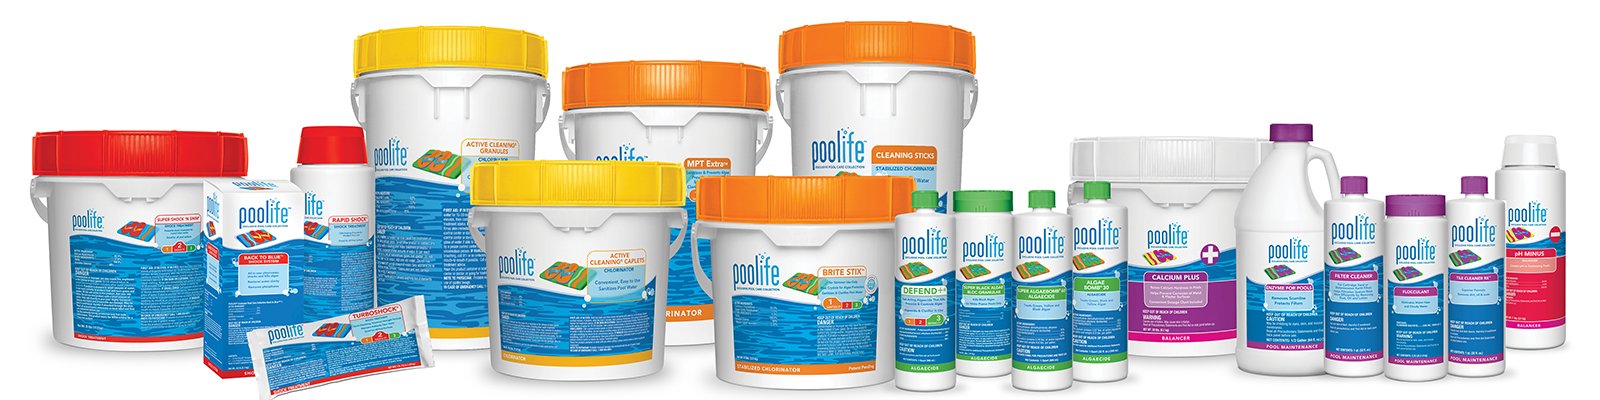 poolife - AAA Spa & Pool Services